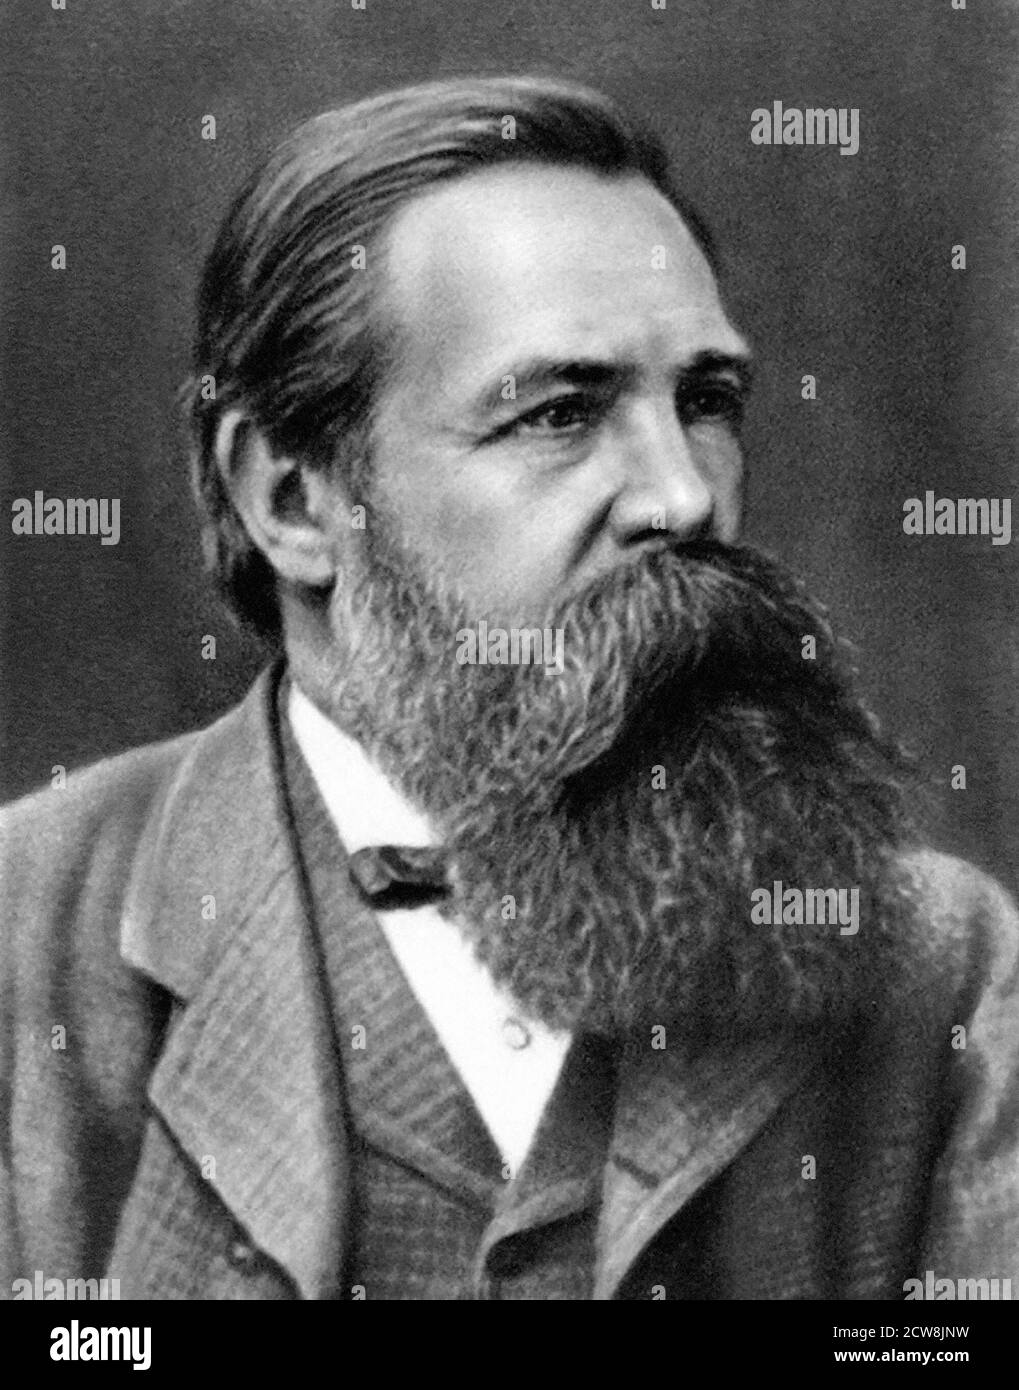 Friedrich Engels. Retrato del filósofo socialista alemán Friedrich (o Frederick) Engels (1820-1895), Foto de stock